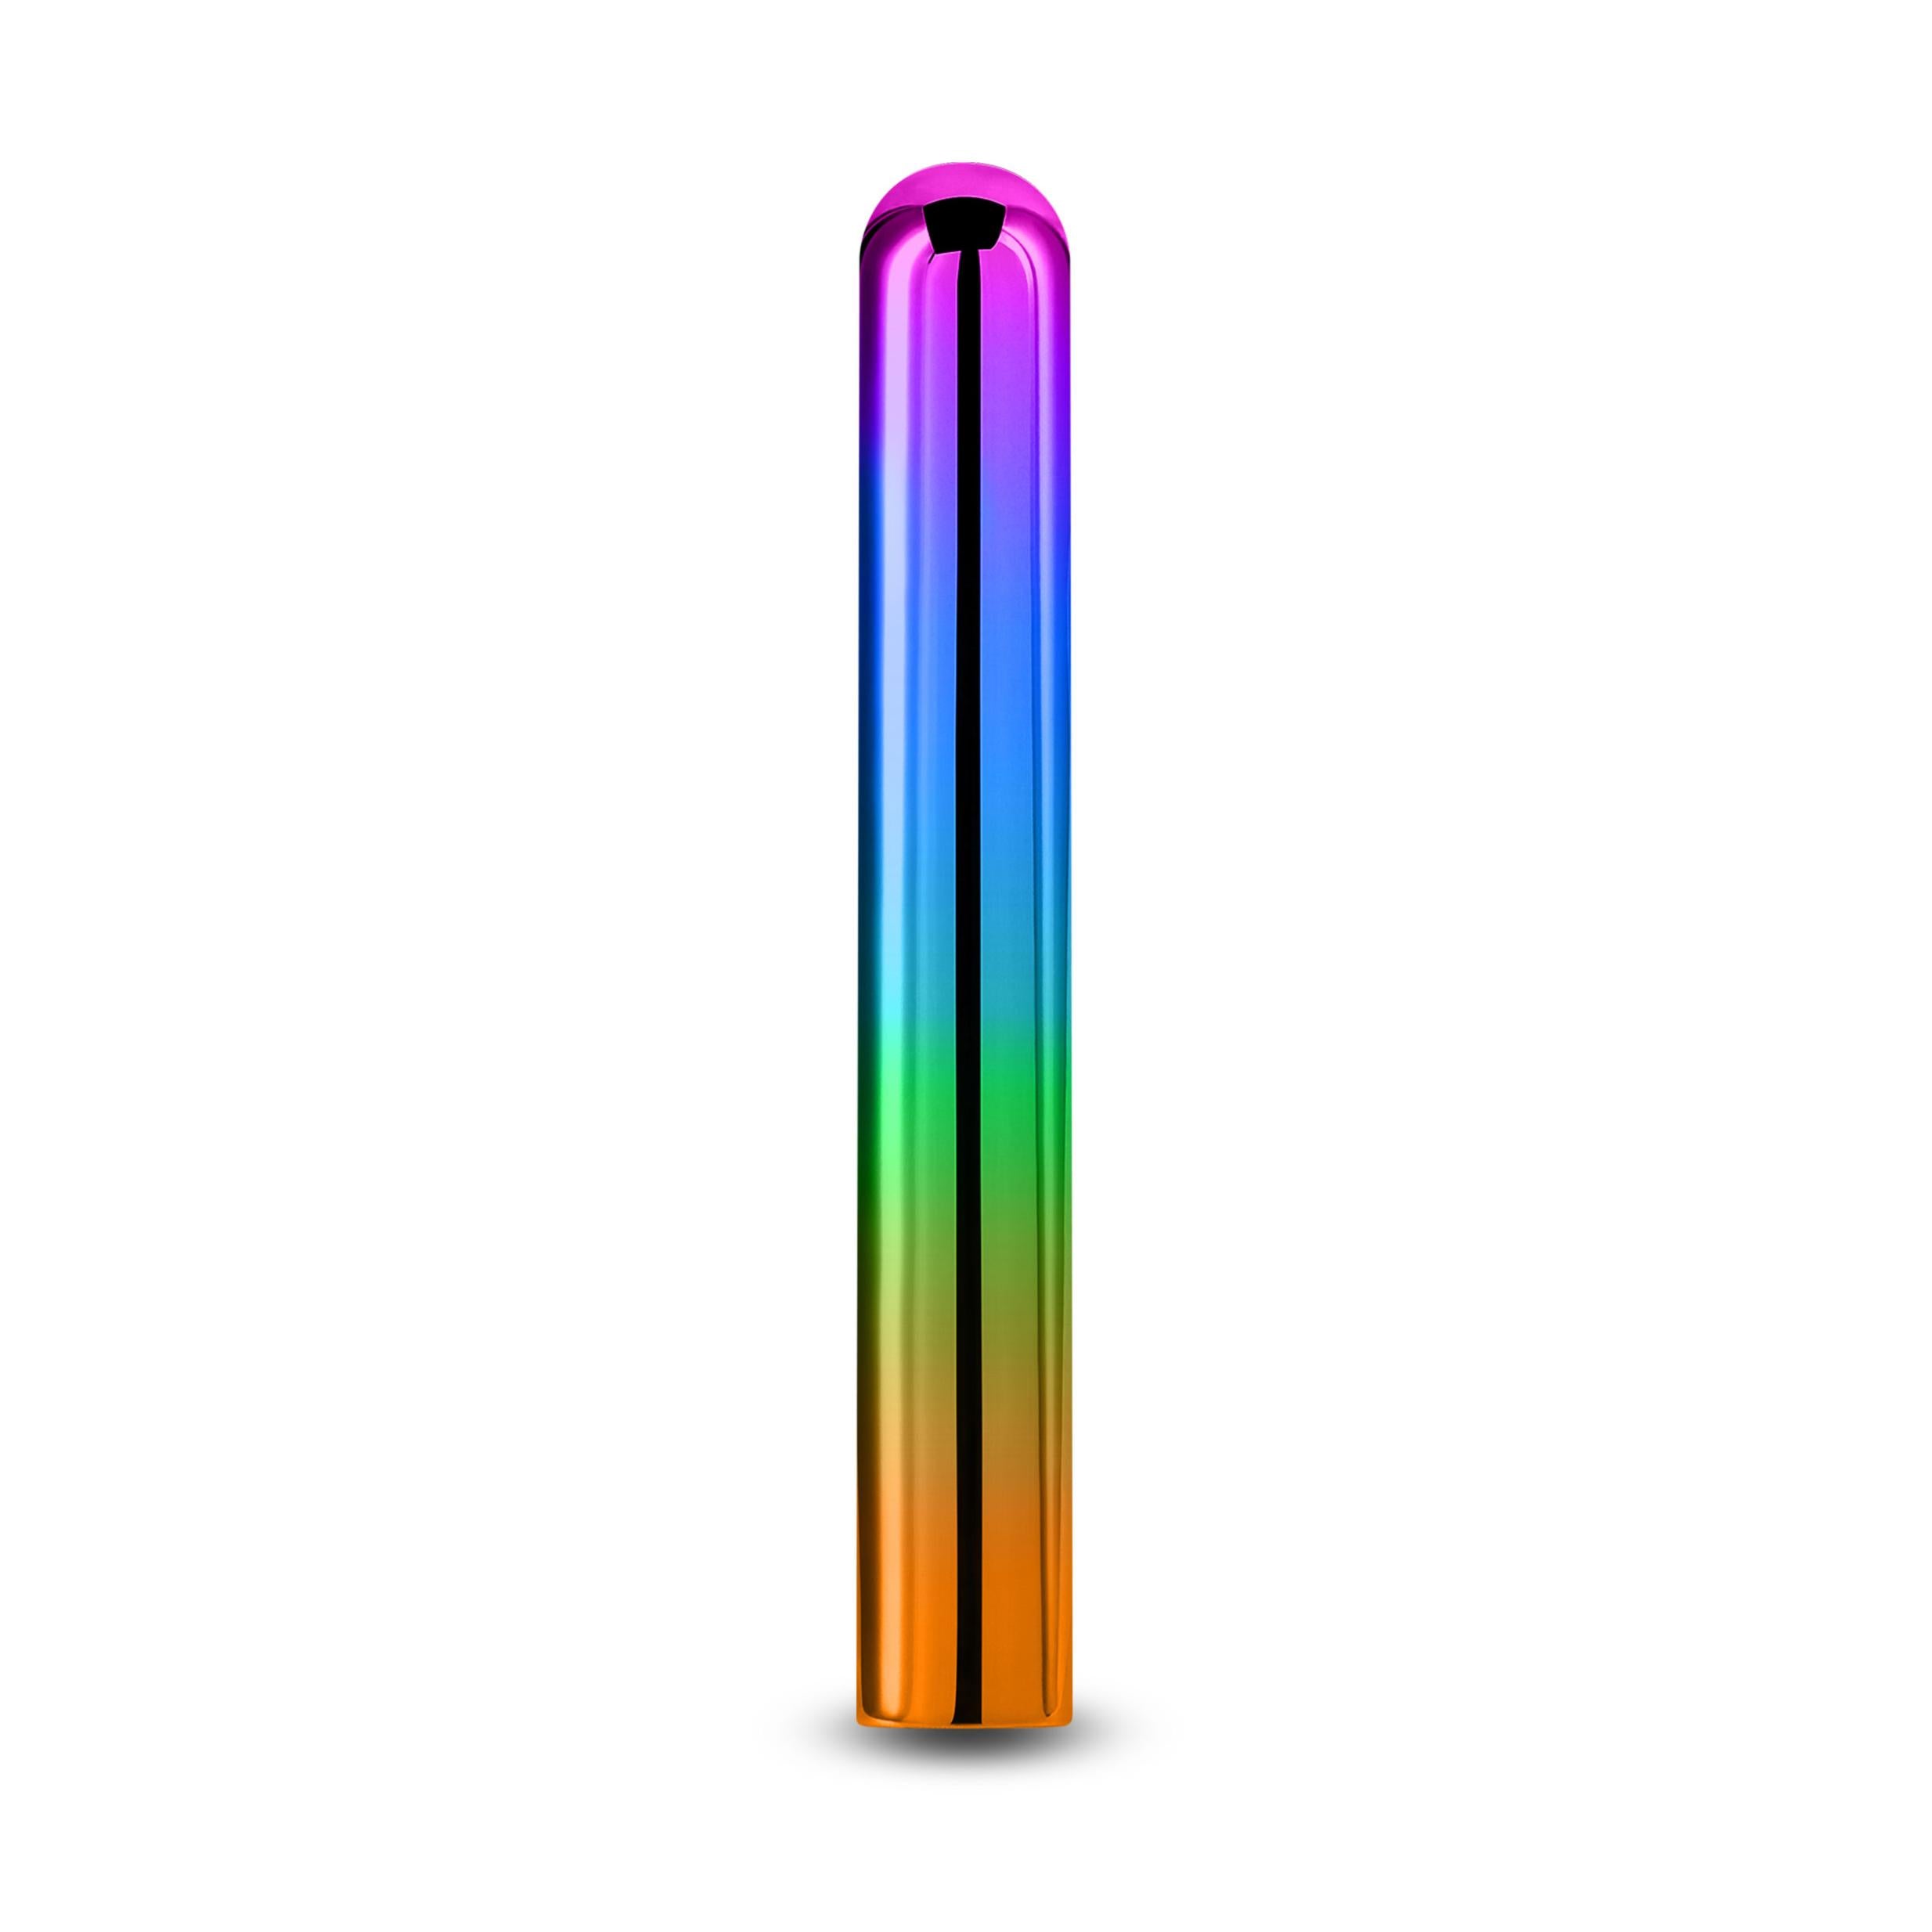 Chroma Rainbow: Slim Vibrator by NS Novelties Large